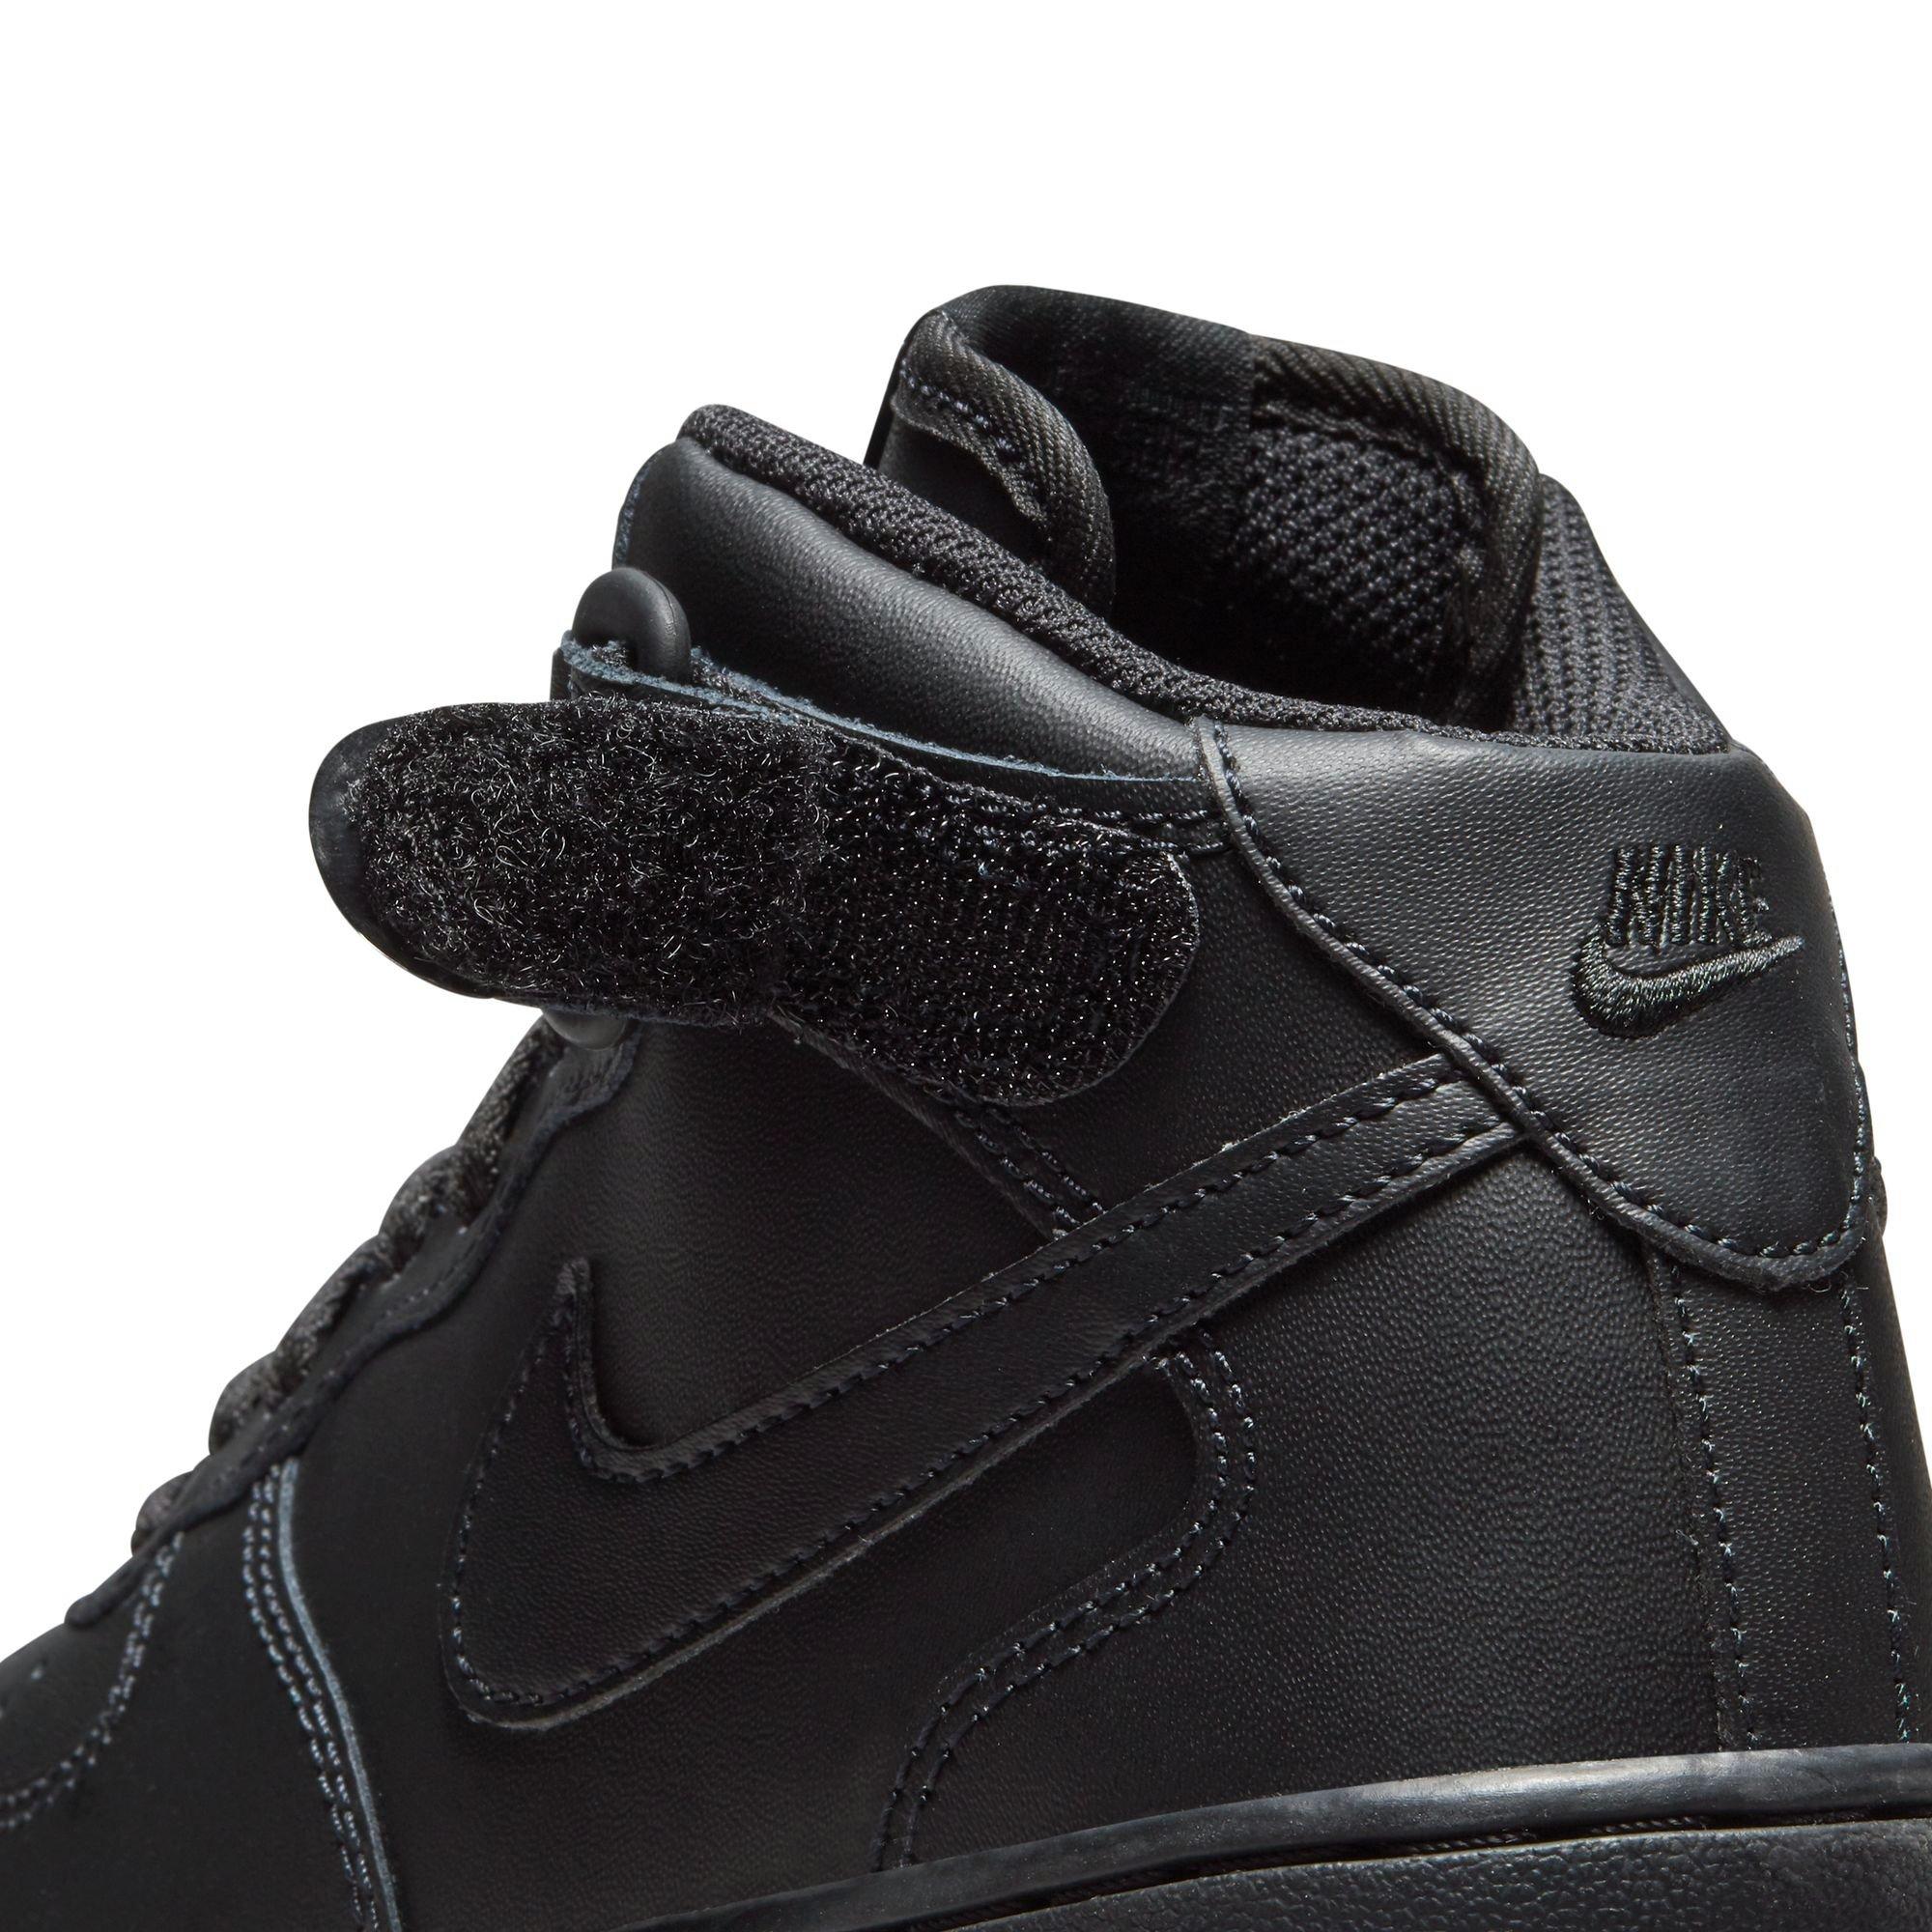 Nike Air Force 1 LE Black/Black Preschool Kids' Shoe